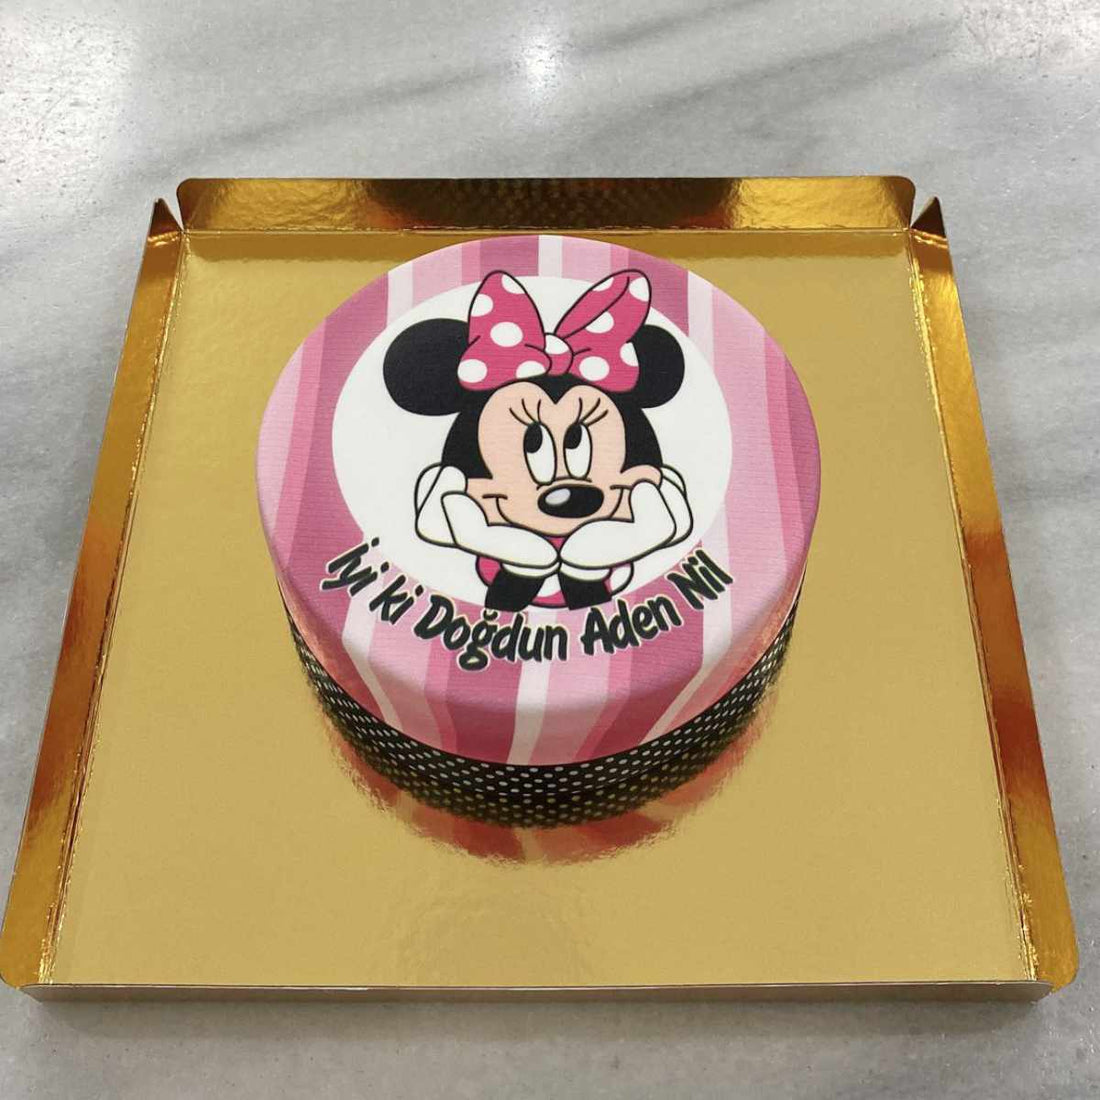 Minnie Mouse Pastası